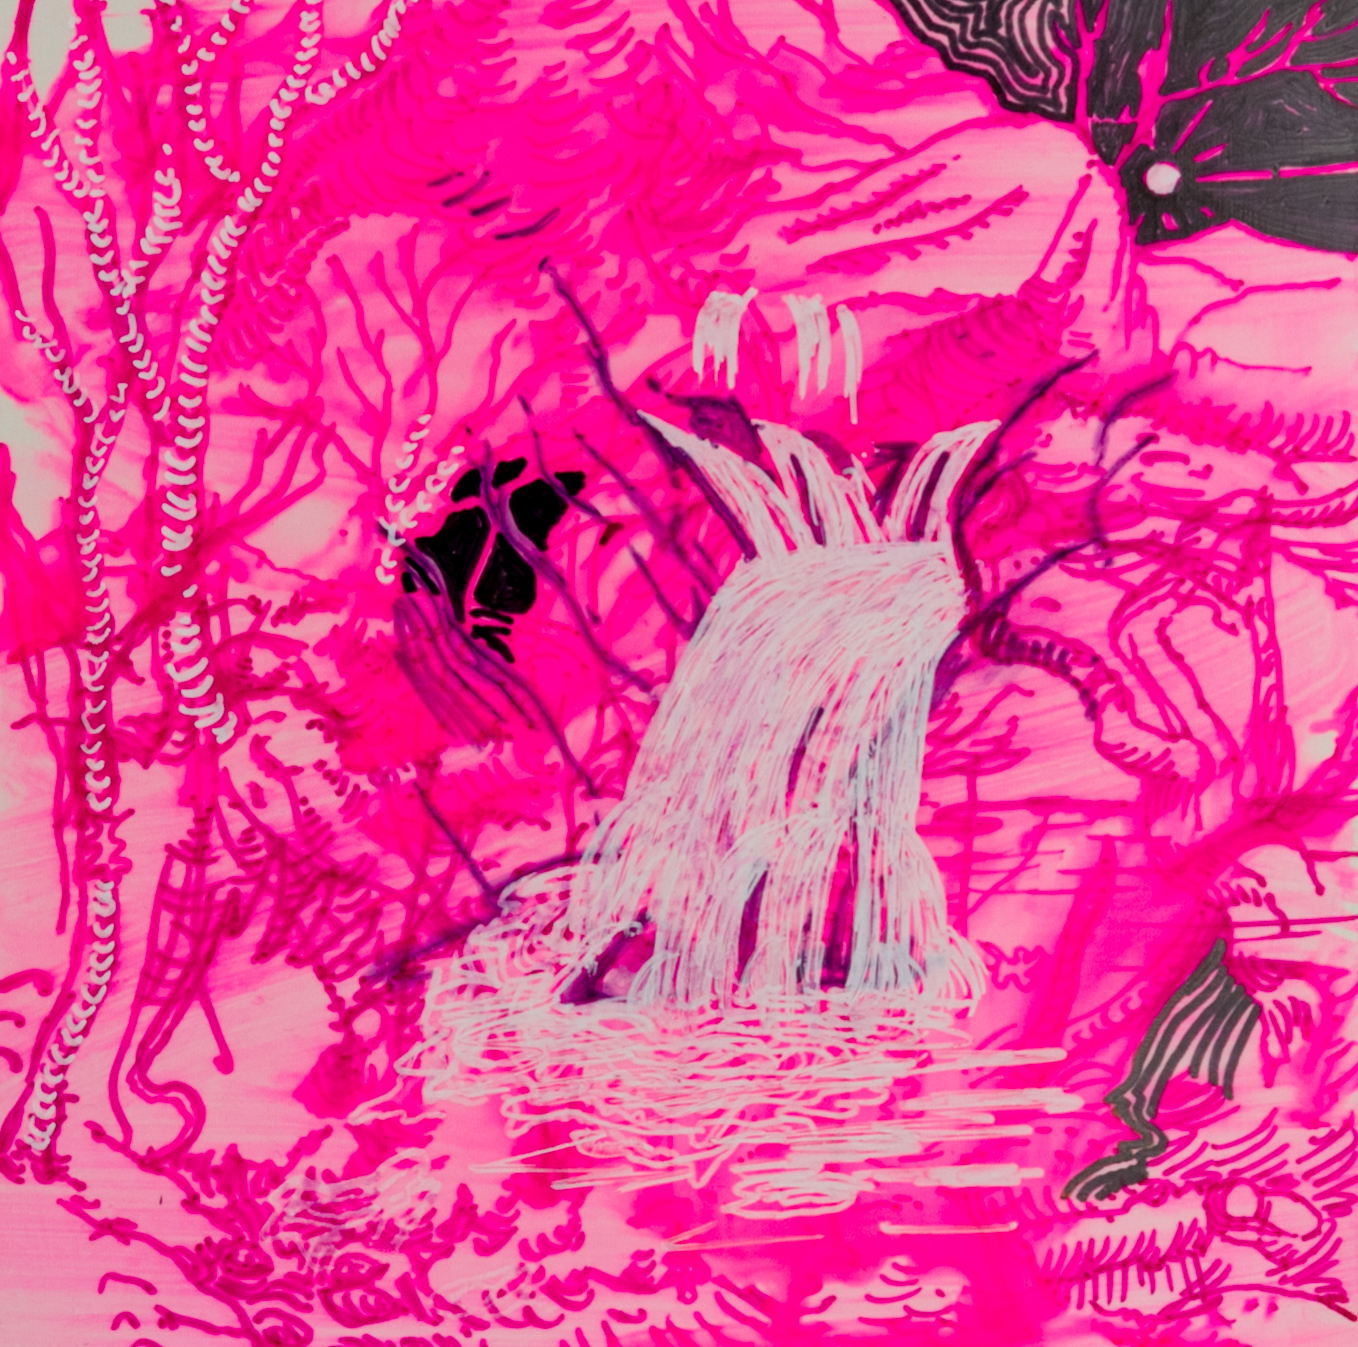  Neon Pink Woods series: Black Falls 